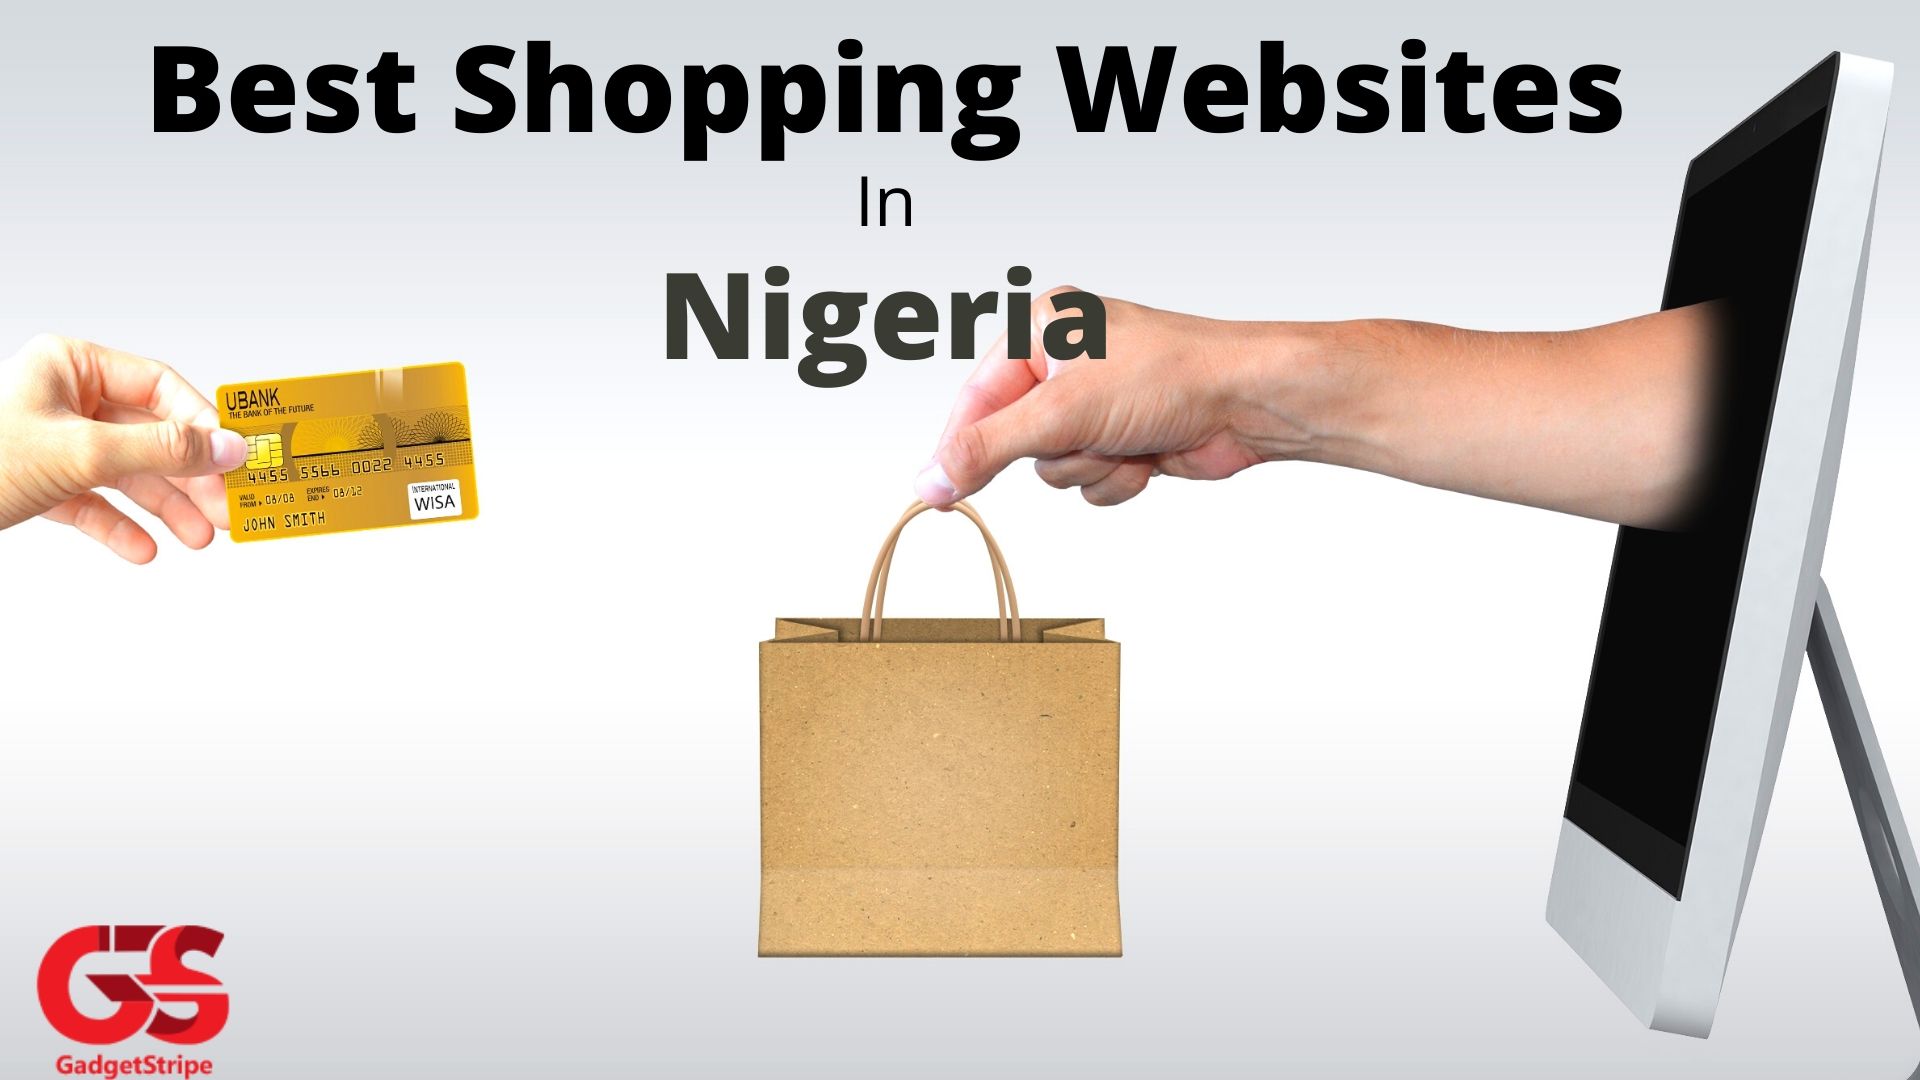 Free Online Shopping Websites In Nigeria